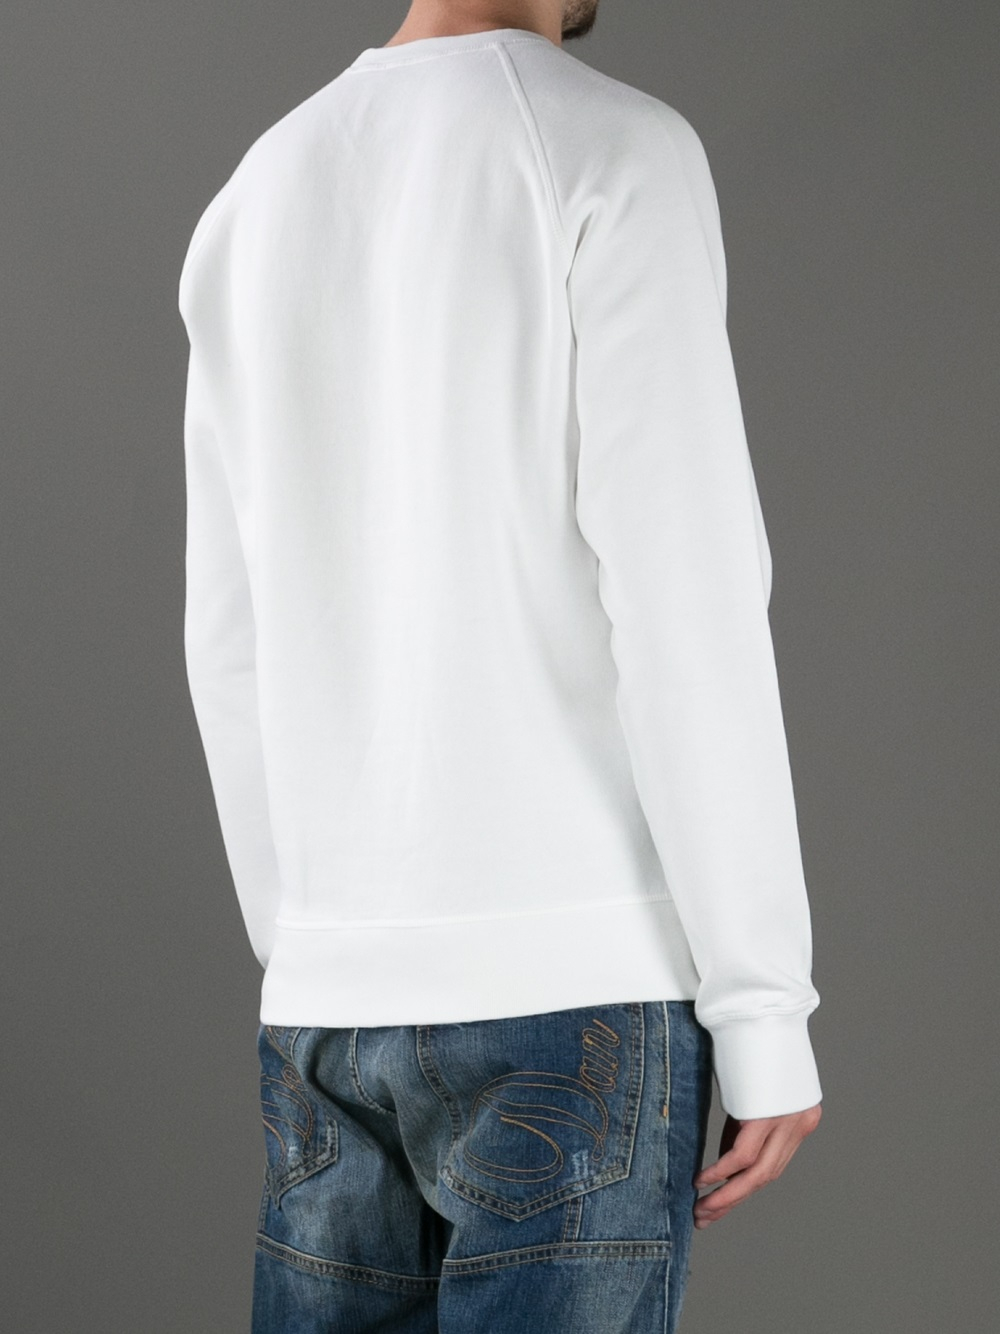 Lyst - Dsquared² Bulldog Print Sweatshirt in White for Men